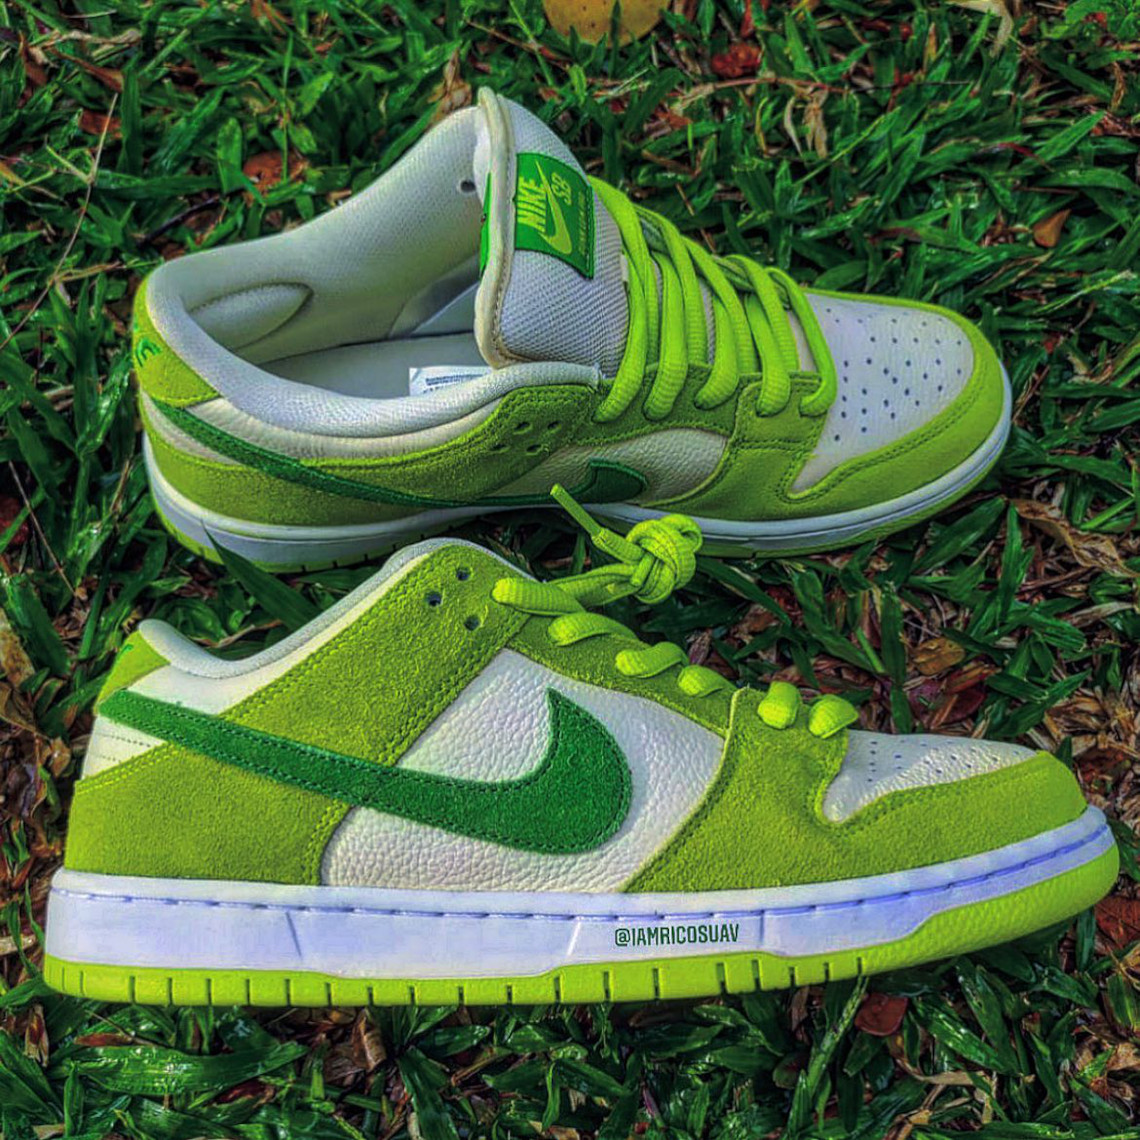 Nike SB nike dunk low skate shoes Dunk Low "Green Apple" Release Date | SneakerNews.com